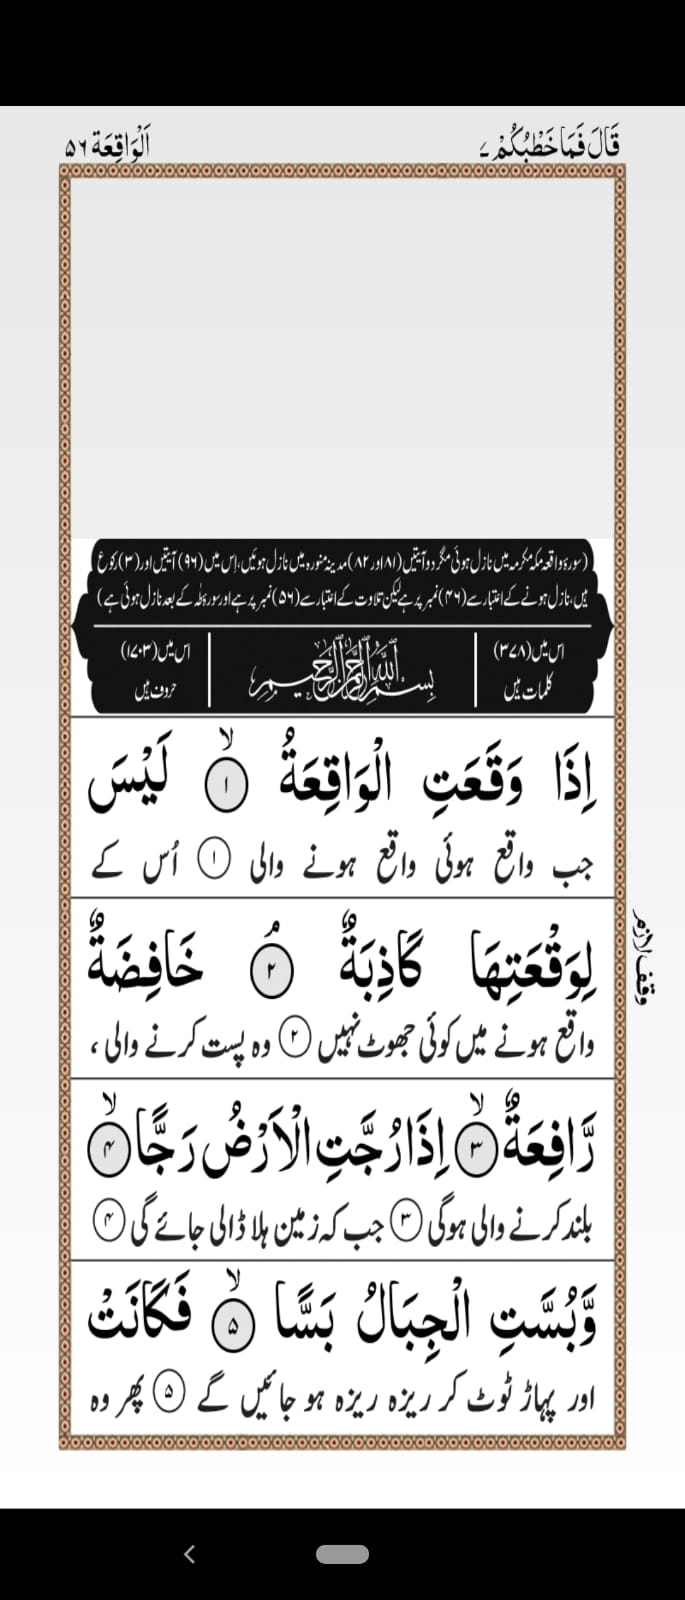 Surah Waqiah with Urdu Translation Page 1